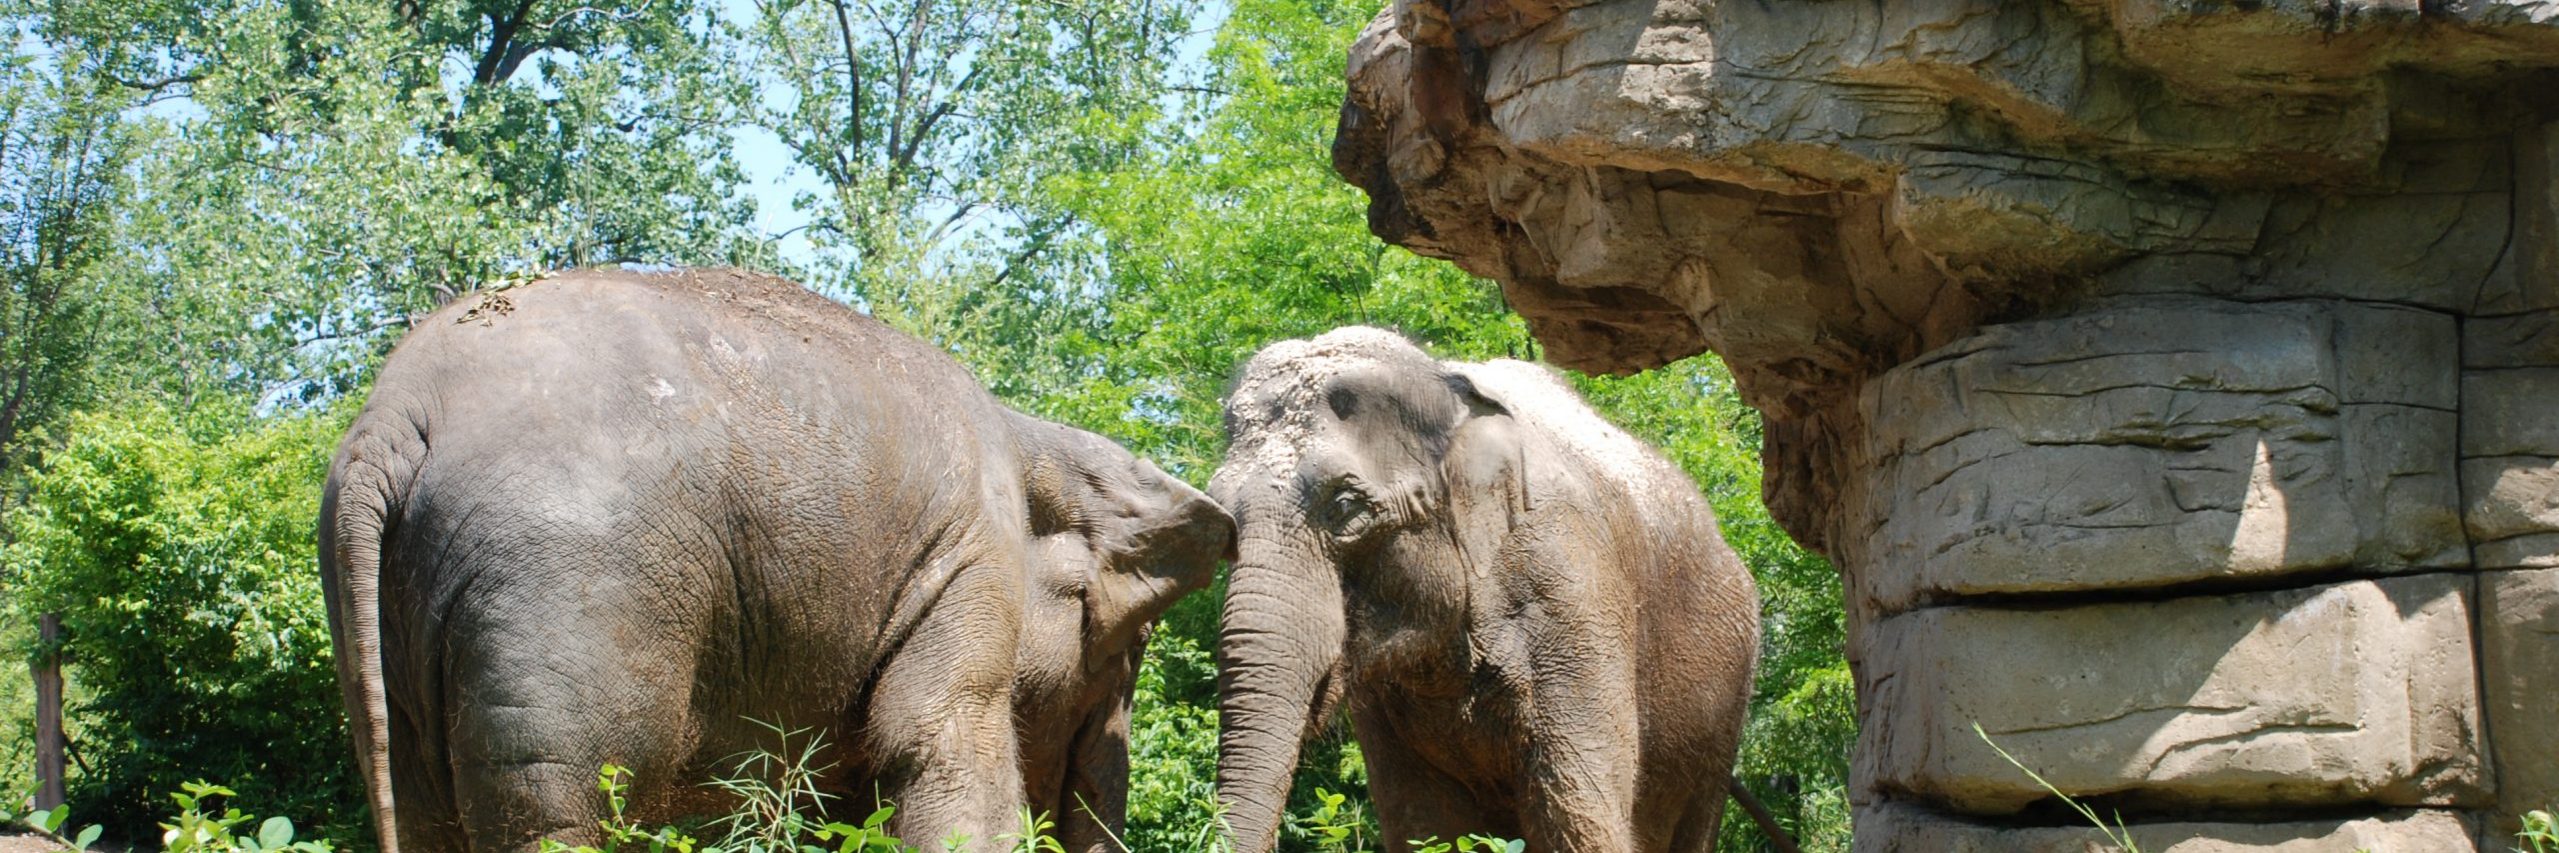 Raja the elephant with one other elephant